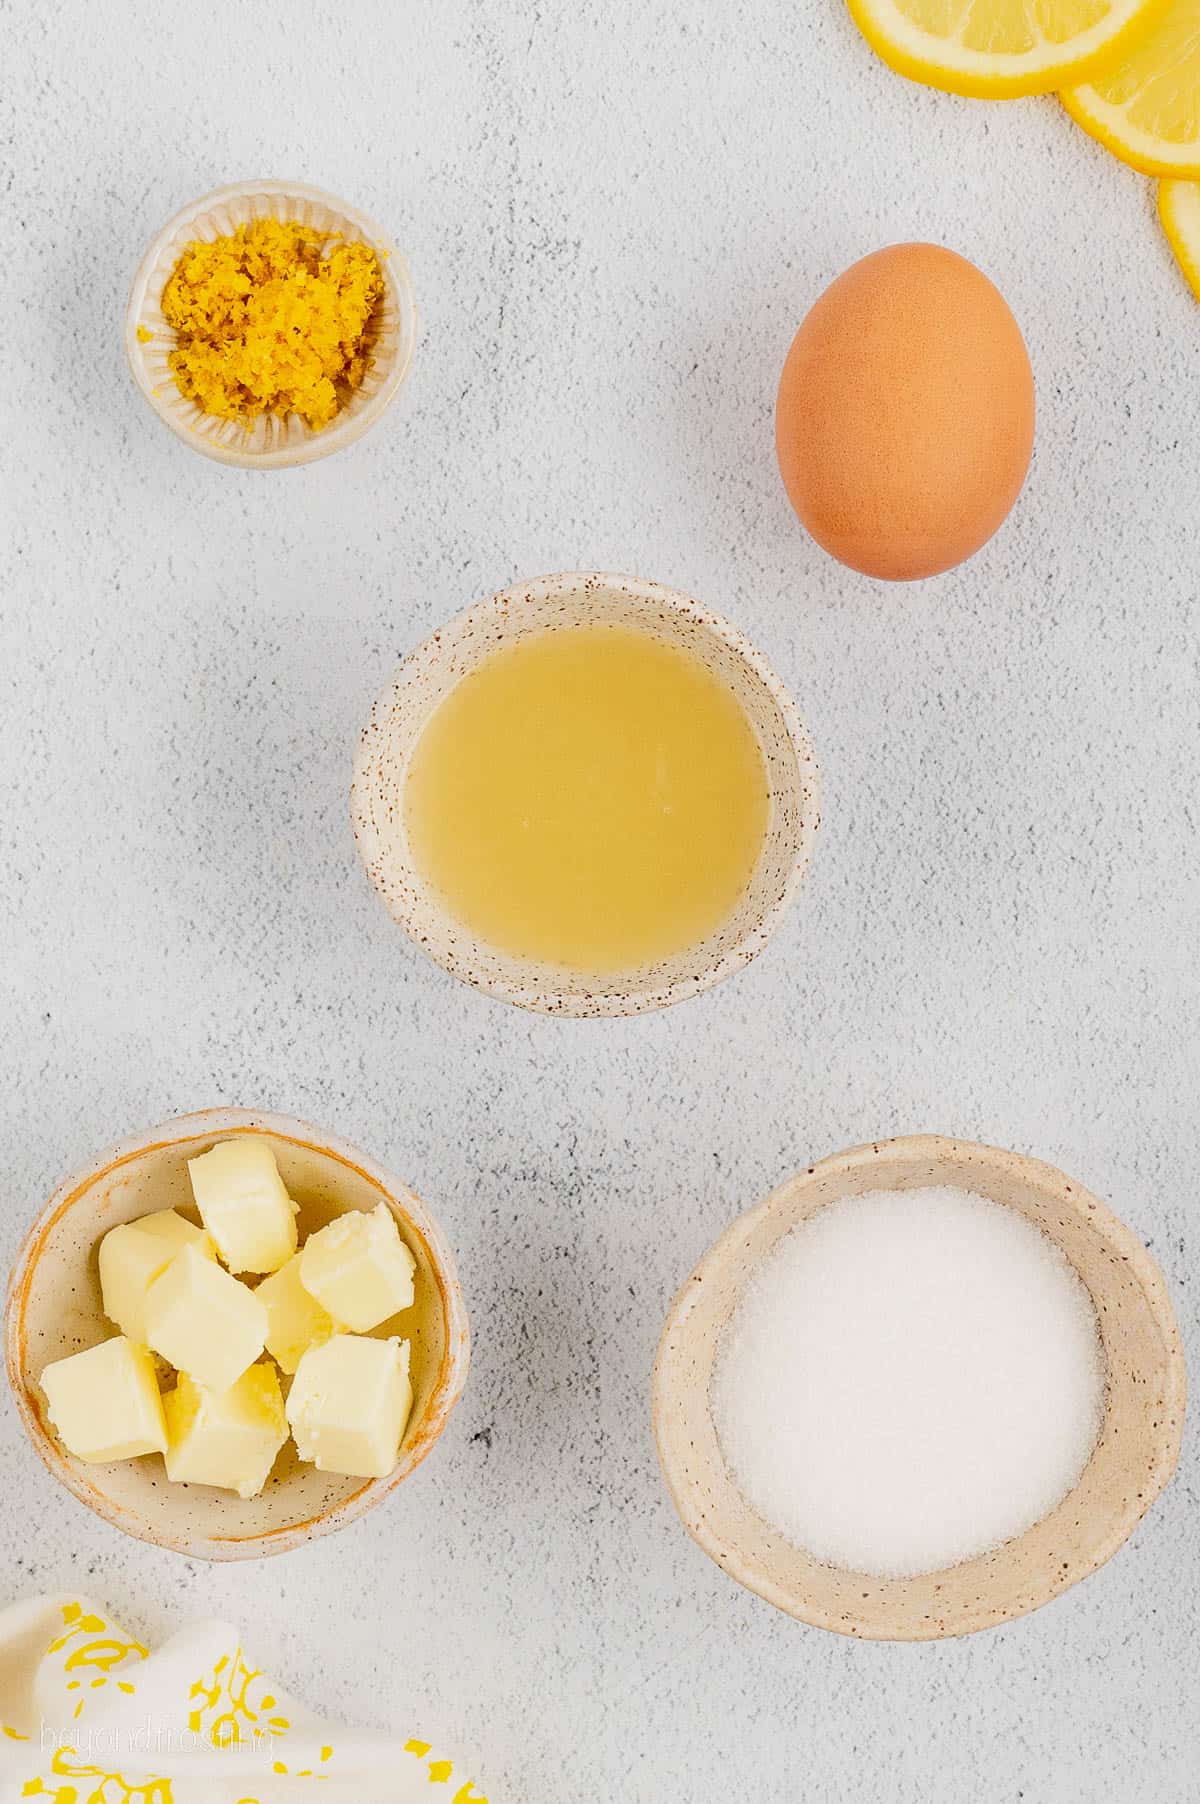 The ingredients for easy homemade lemon curd.